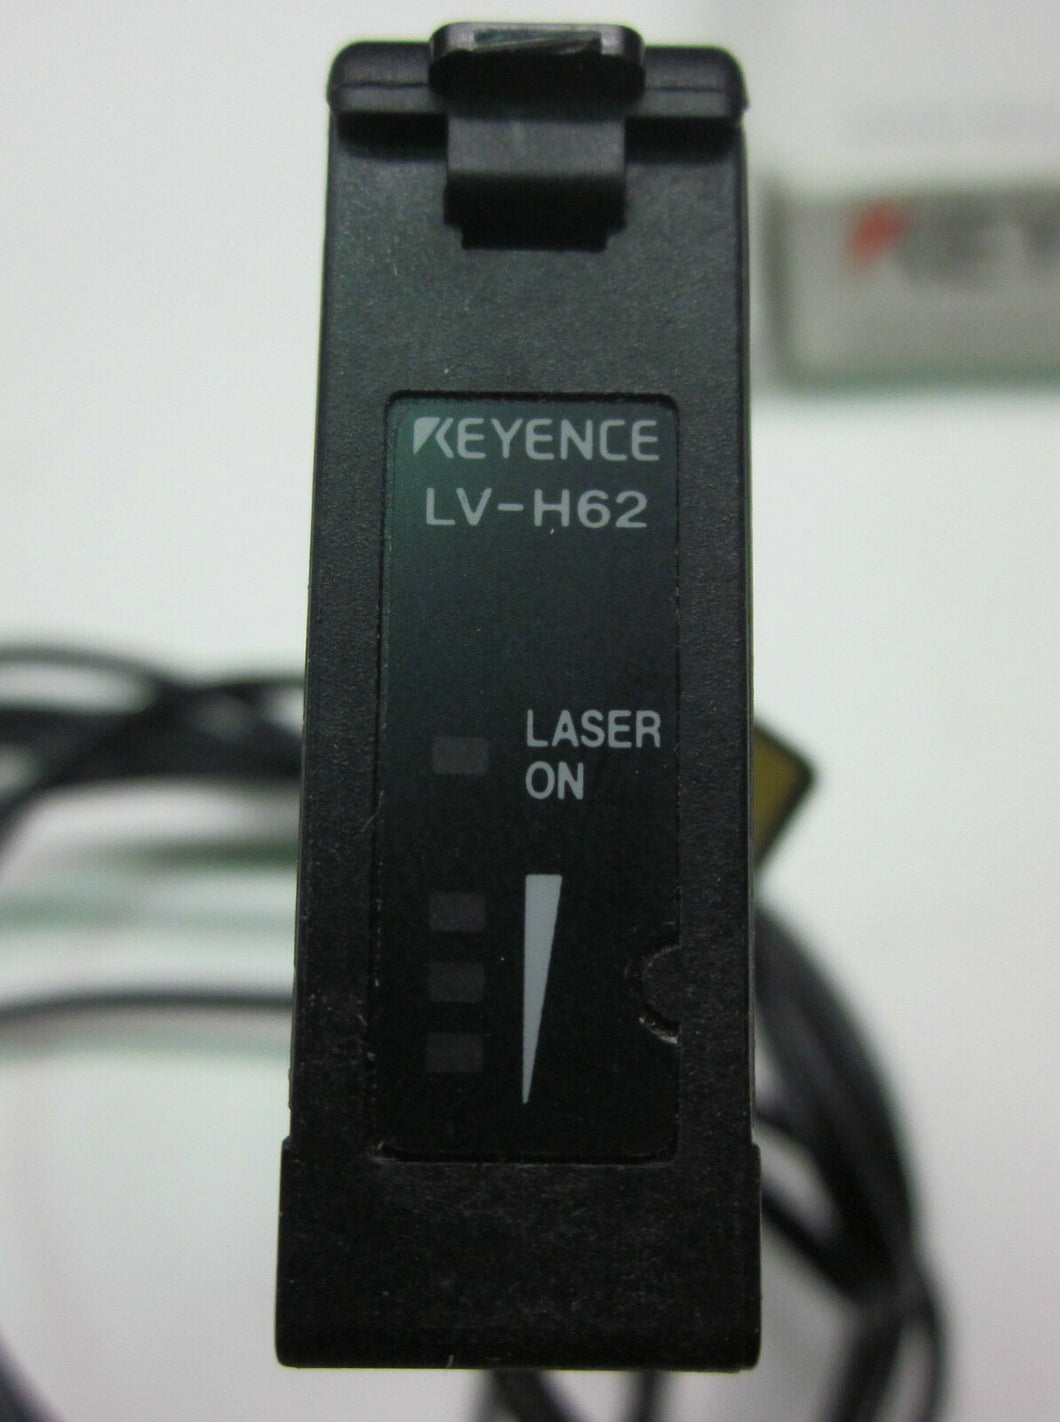 Keyence LV-H62 digital laser sensor head